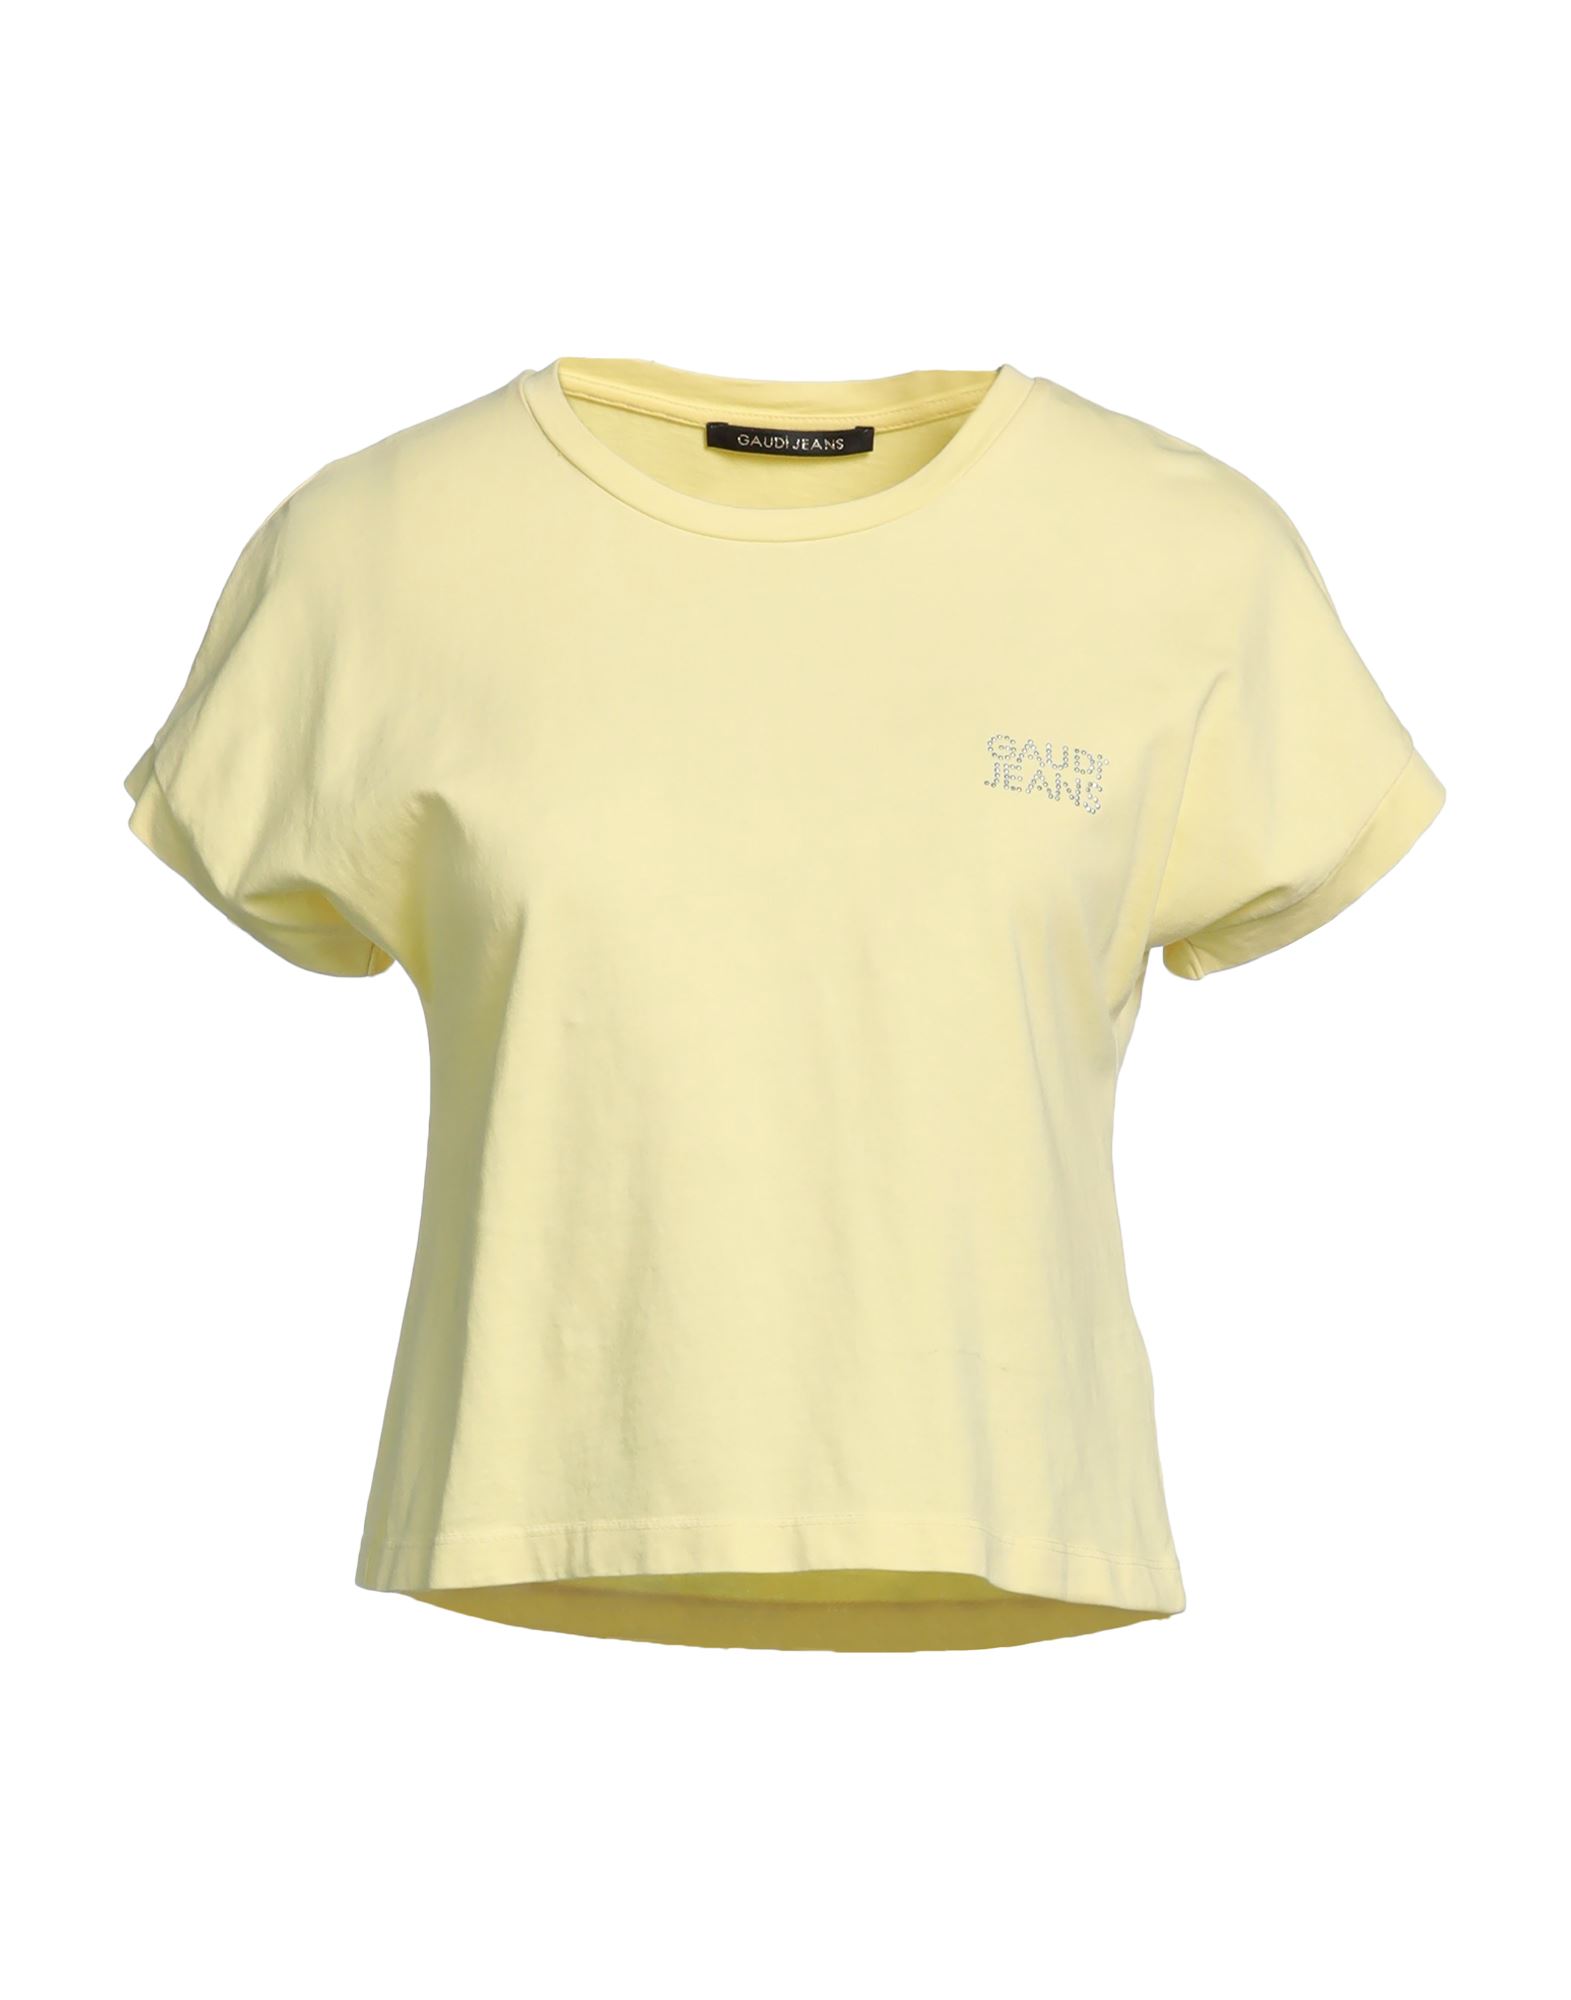 Gaudì Woman T-shirt Light Yellow Size Xs Cotton